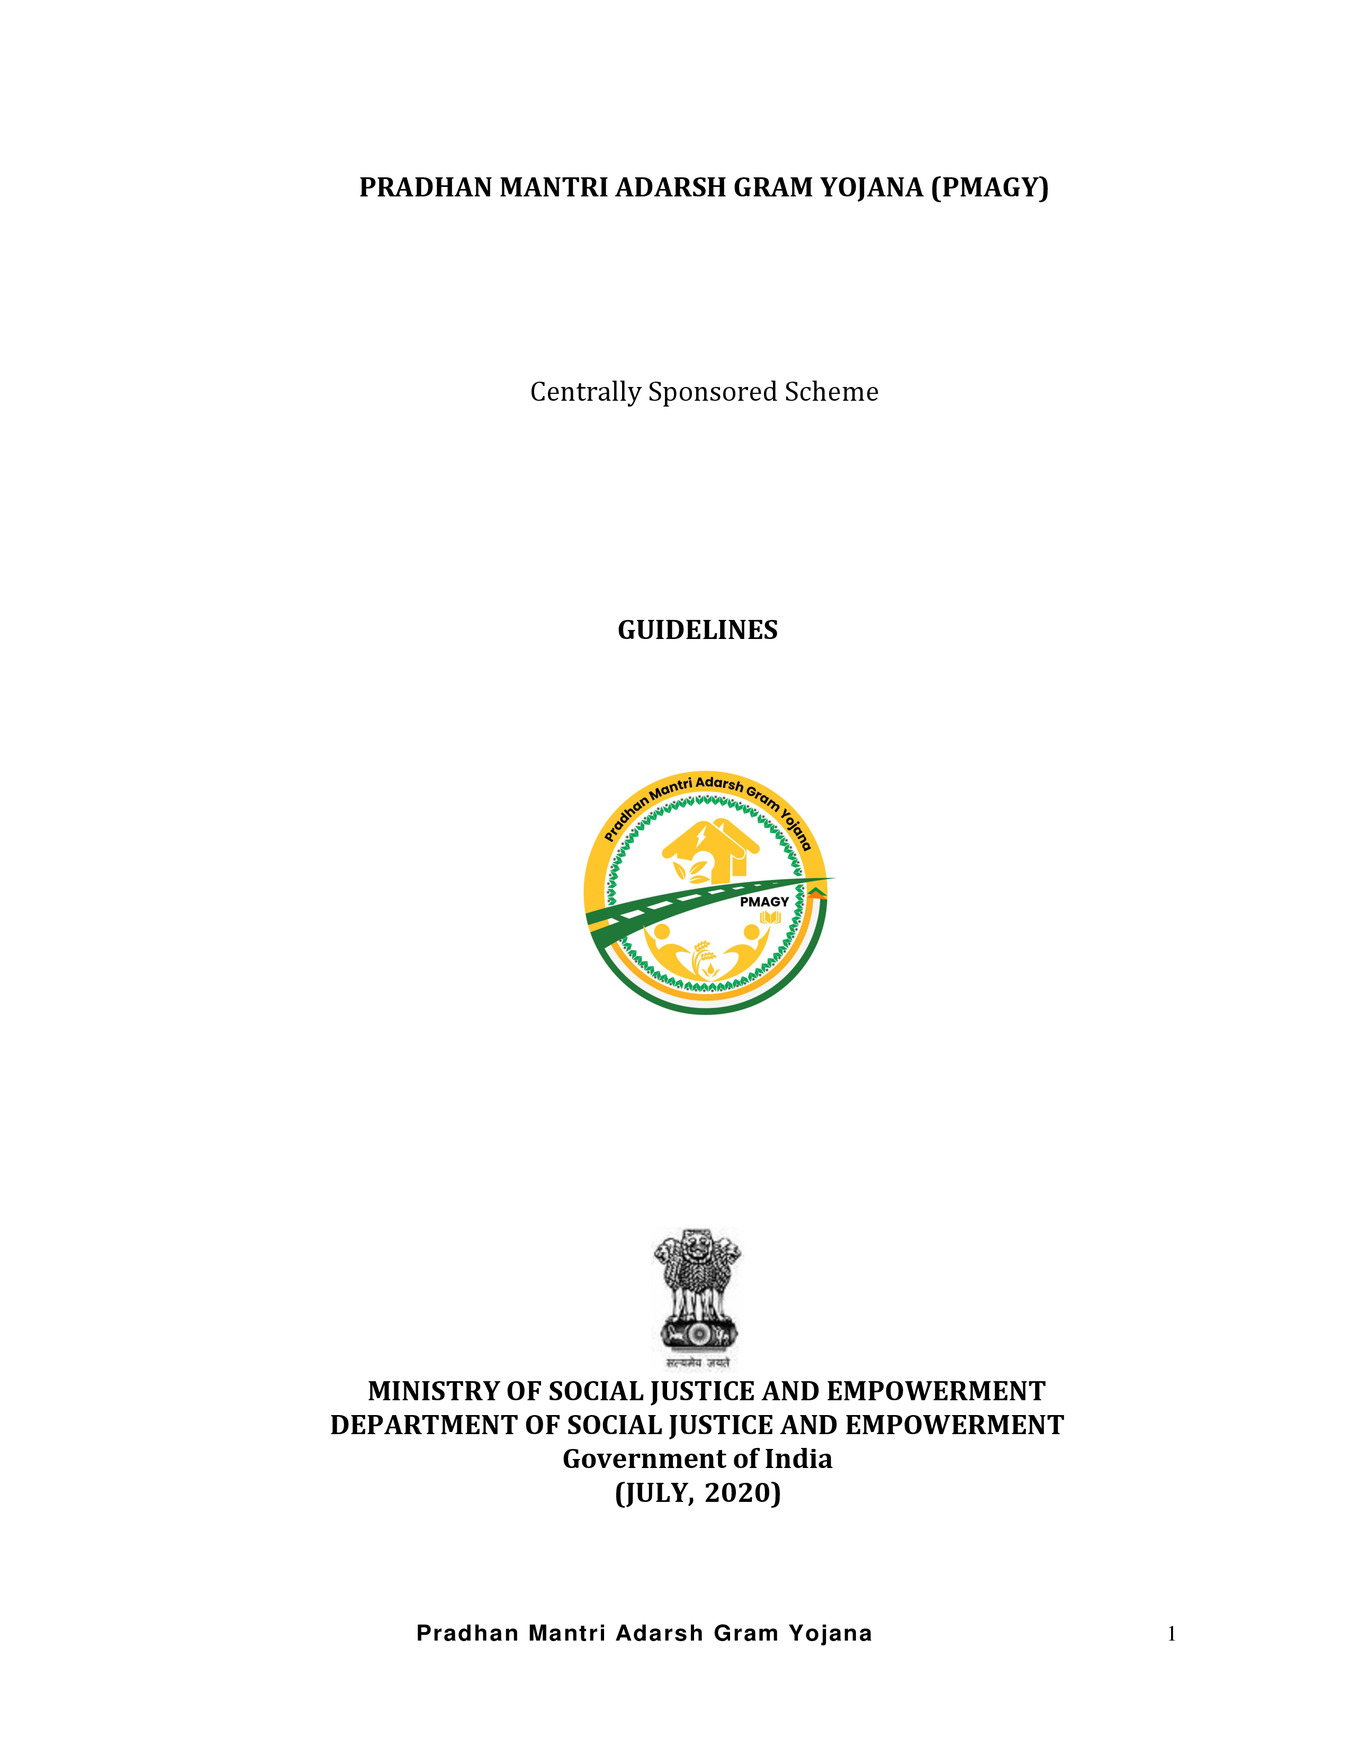 Pradhan Mantri Adarsh Gram Yojana (PMAGY) Guidelines PDF